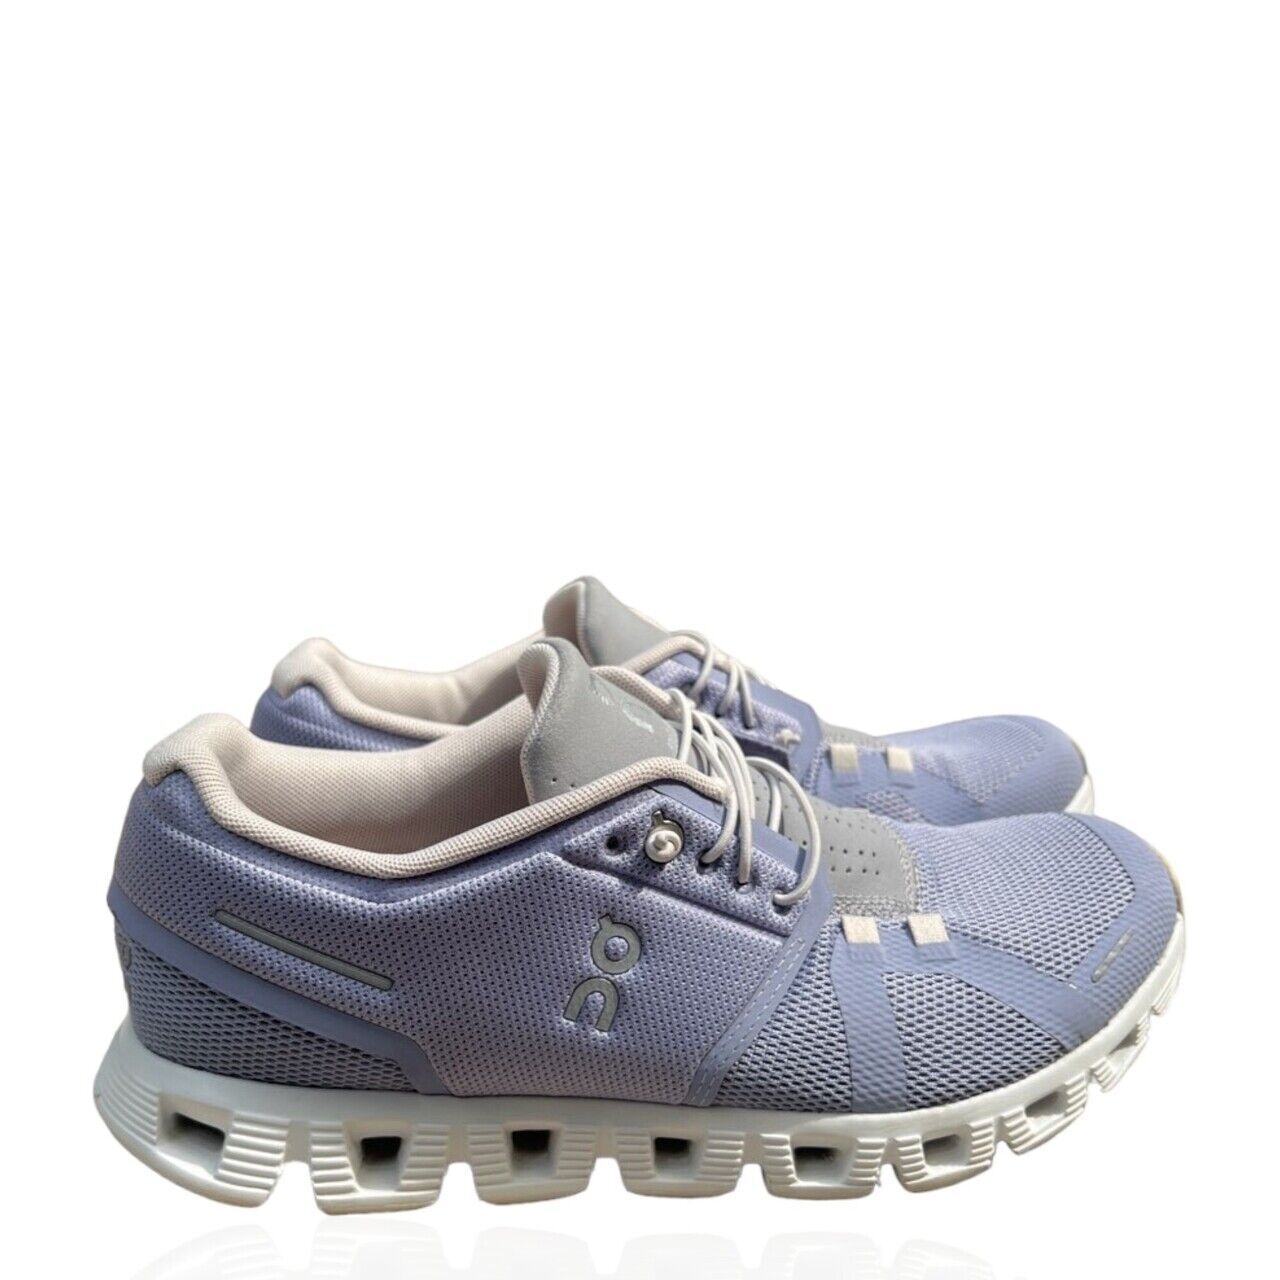 Cloud 5 Nimbus Alloy Womens Running Shoes